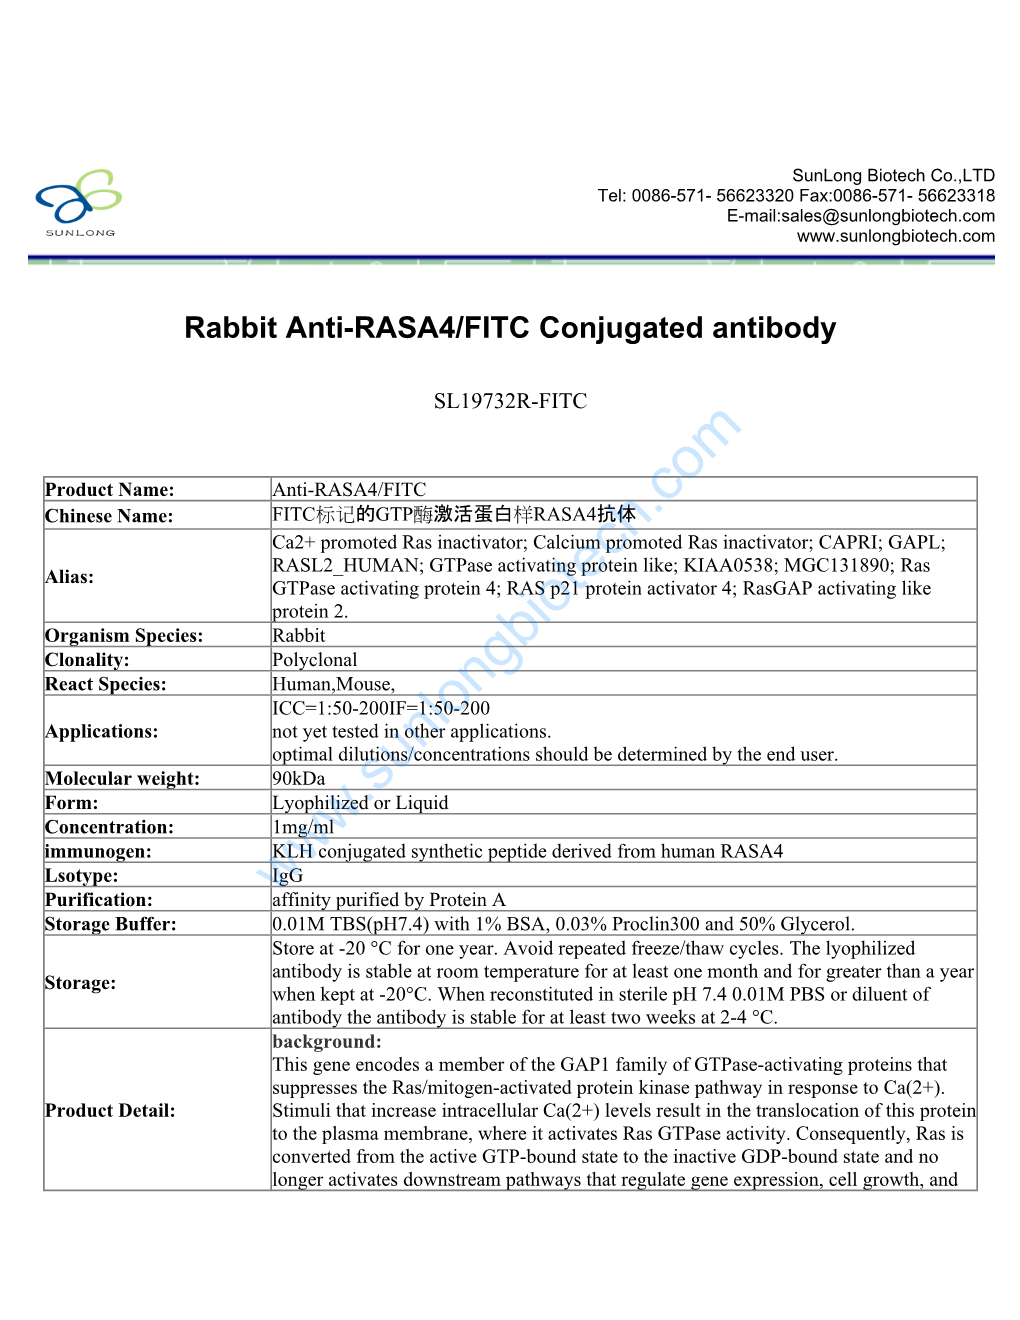 Rabbit Anti-RASA4/FITC Conjugated Antibody